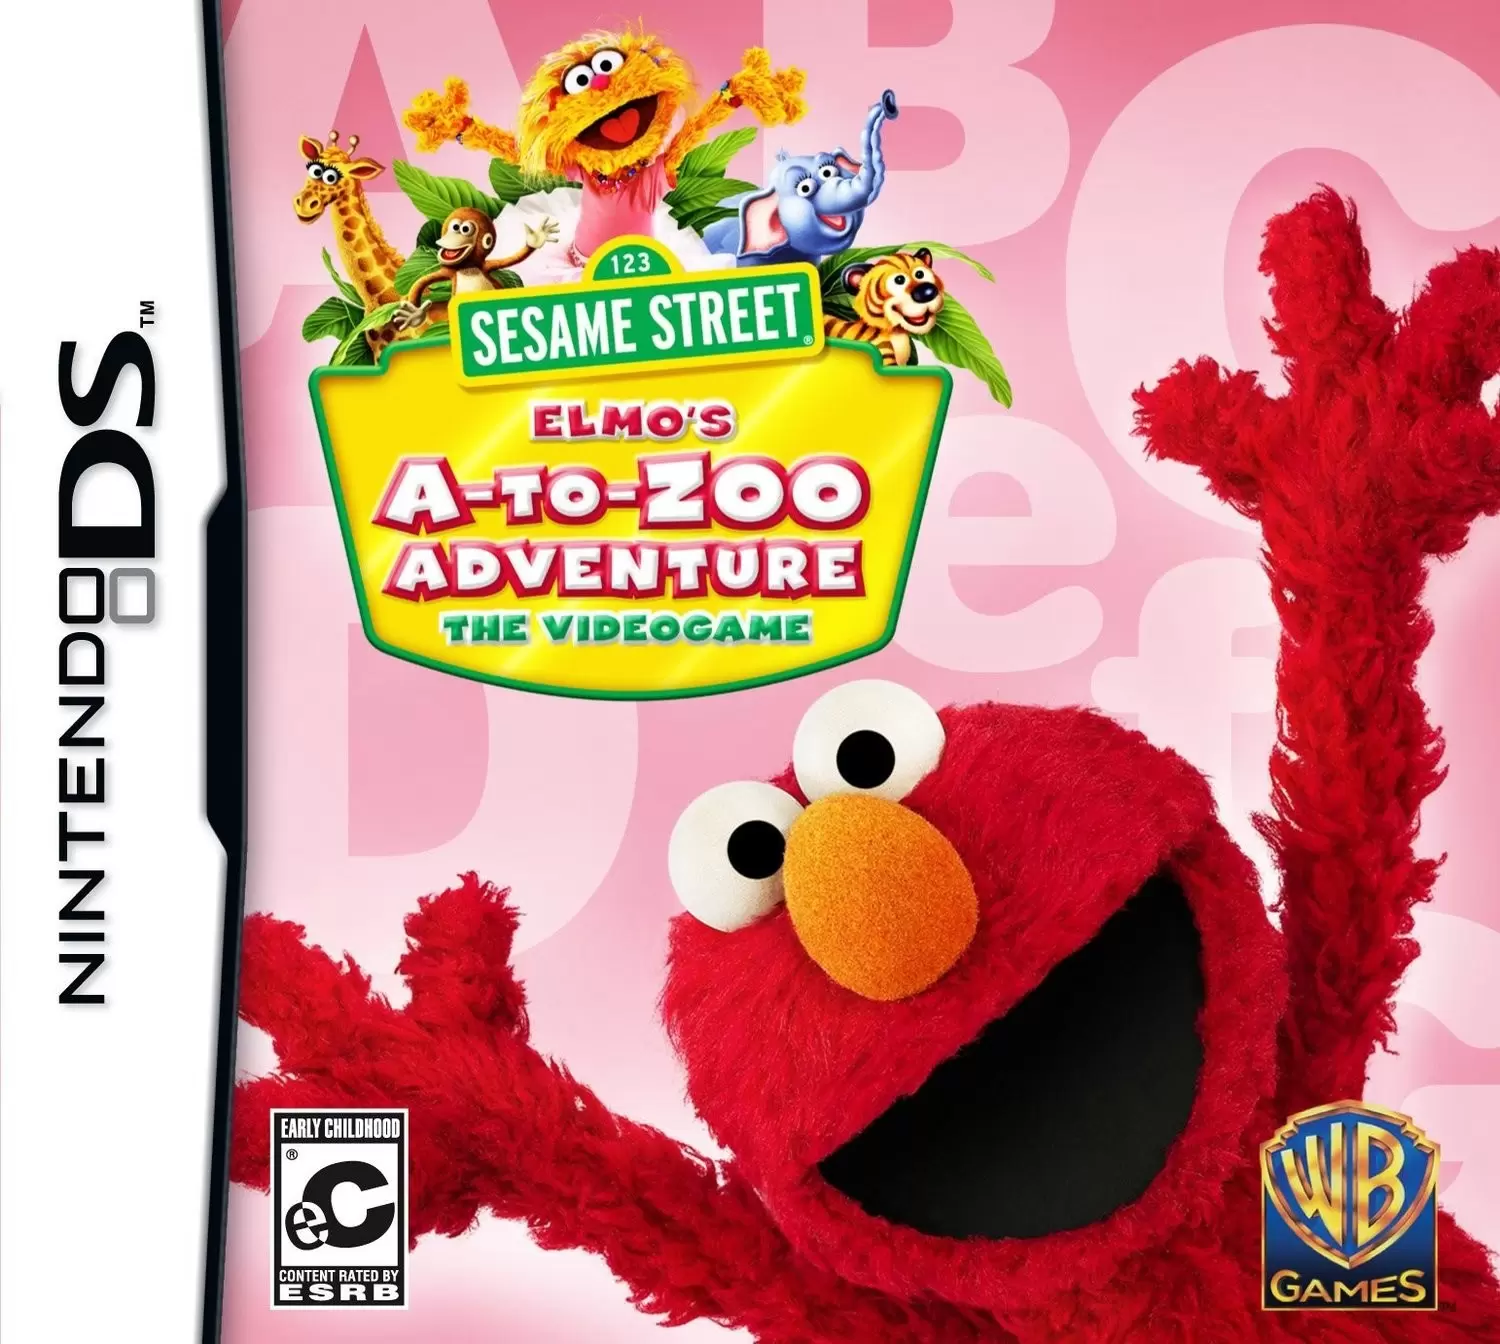 Nintendo DS Games - Sesame Street Elmo\'s A-to-Zoo Adventure the Videogame